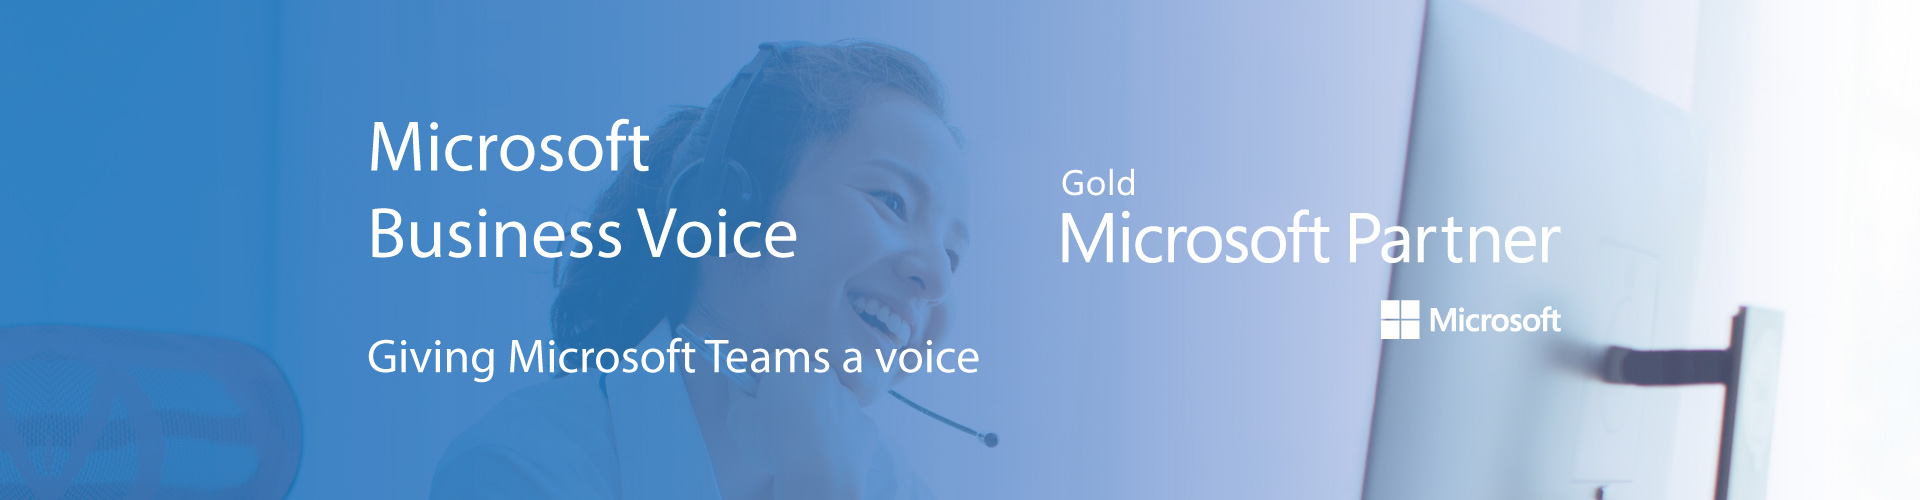 Microsoft Business Voice